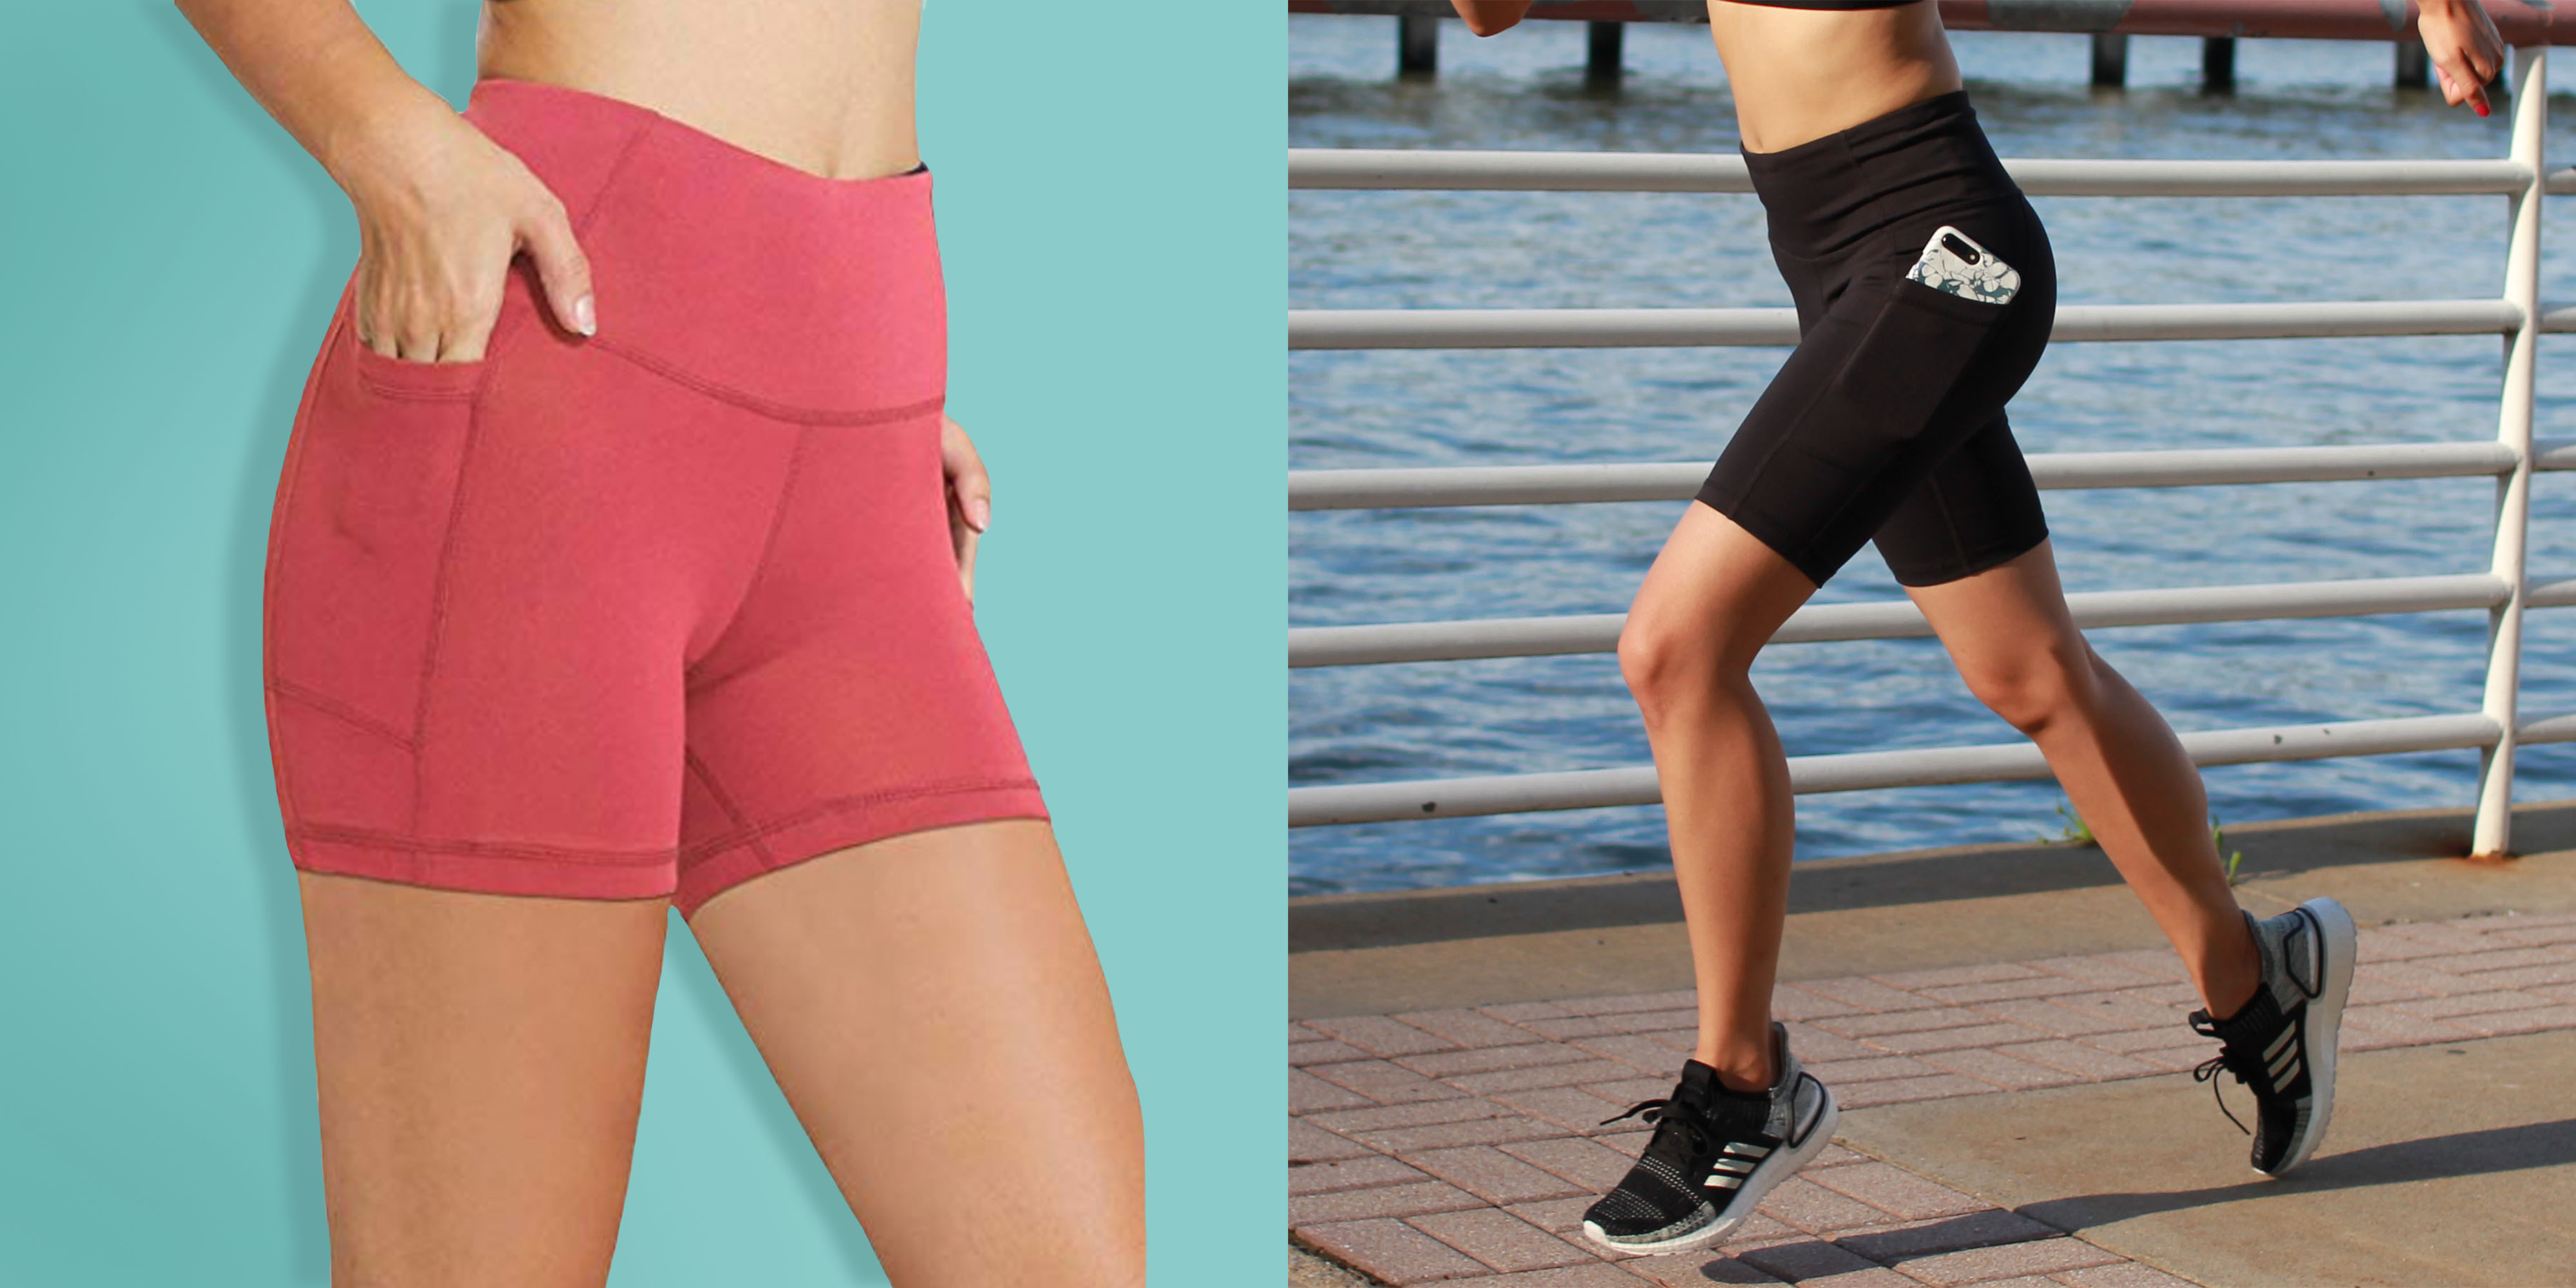 Aoliks Womens High Waist Yoga Short Side Pocket Workout Tummy Control Bike Shorts Running Exercise Spandex Leggings